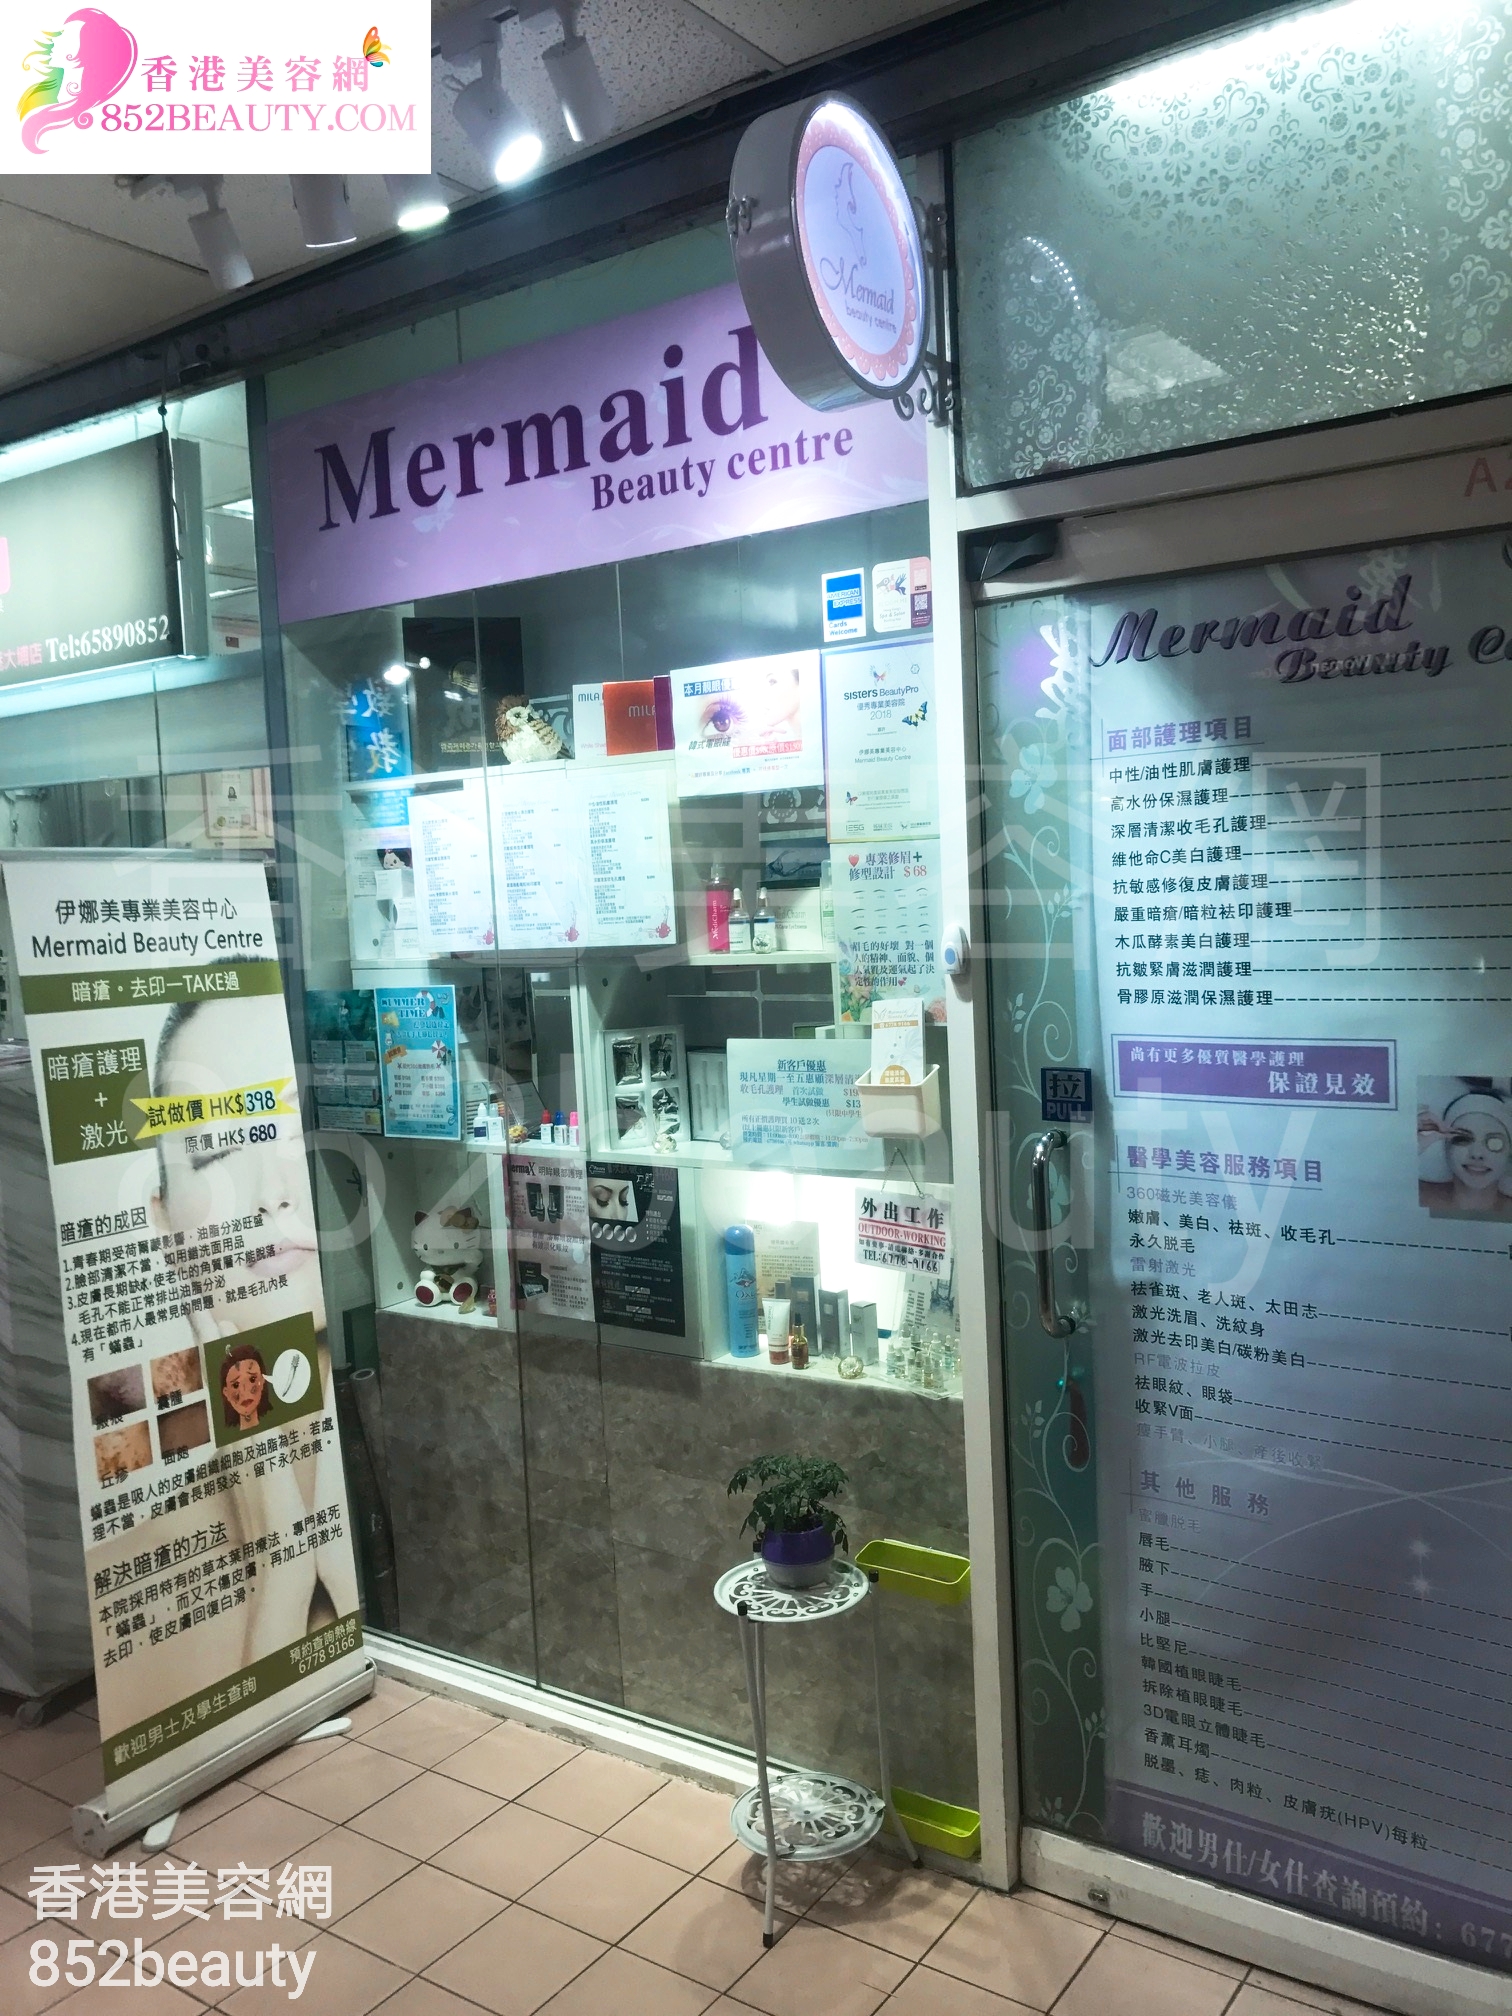 Hair Removal: 伊娜美專業美容中心 Mermaid Beauty Centre